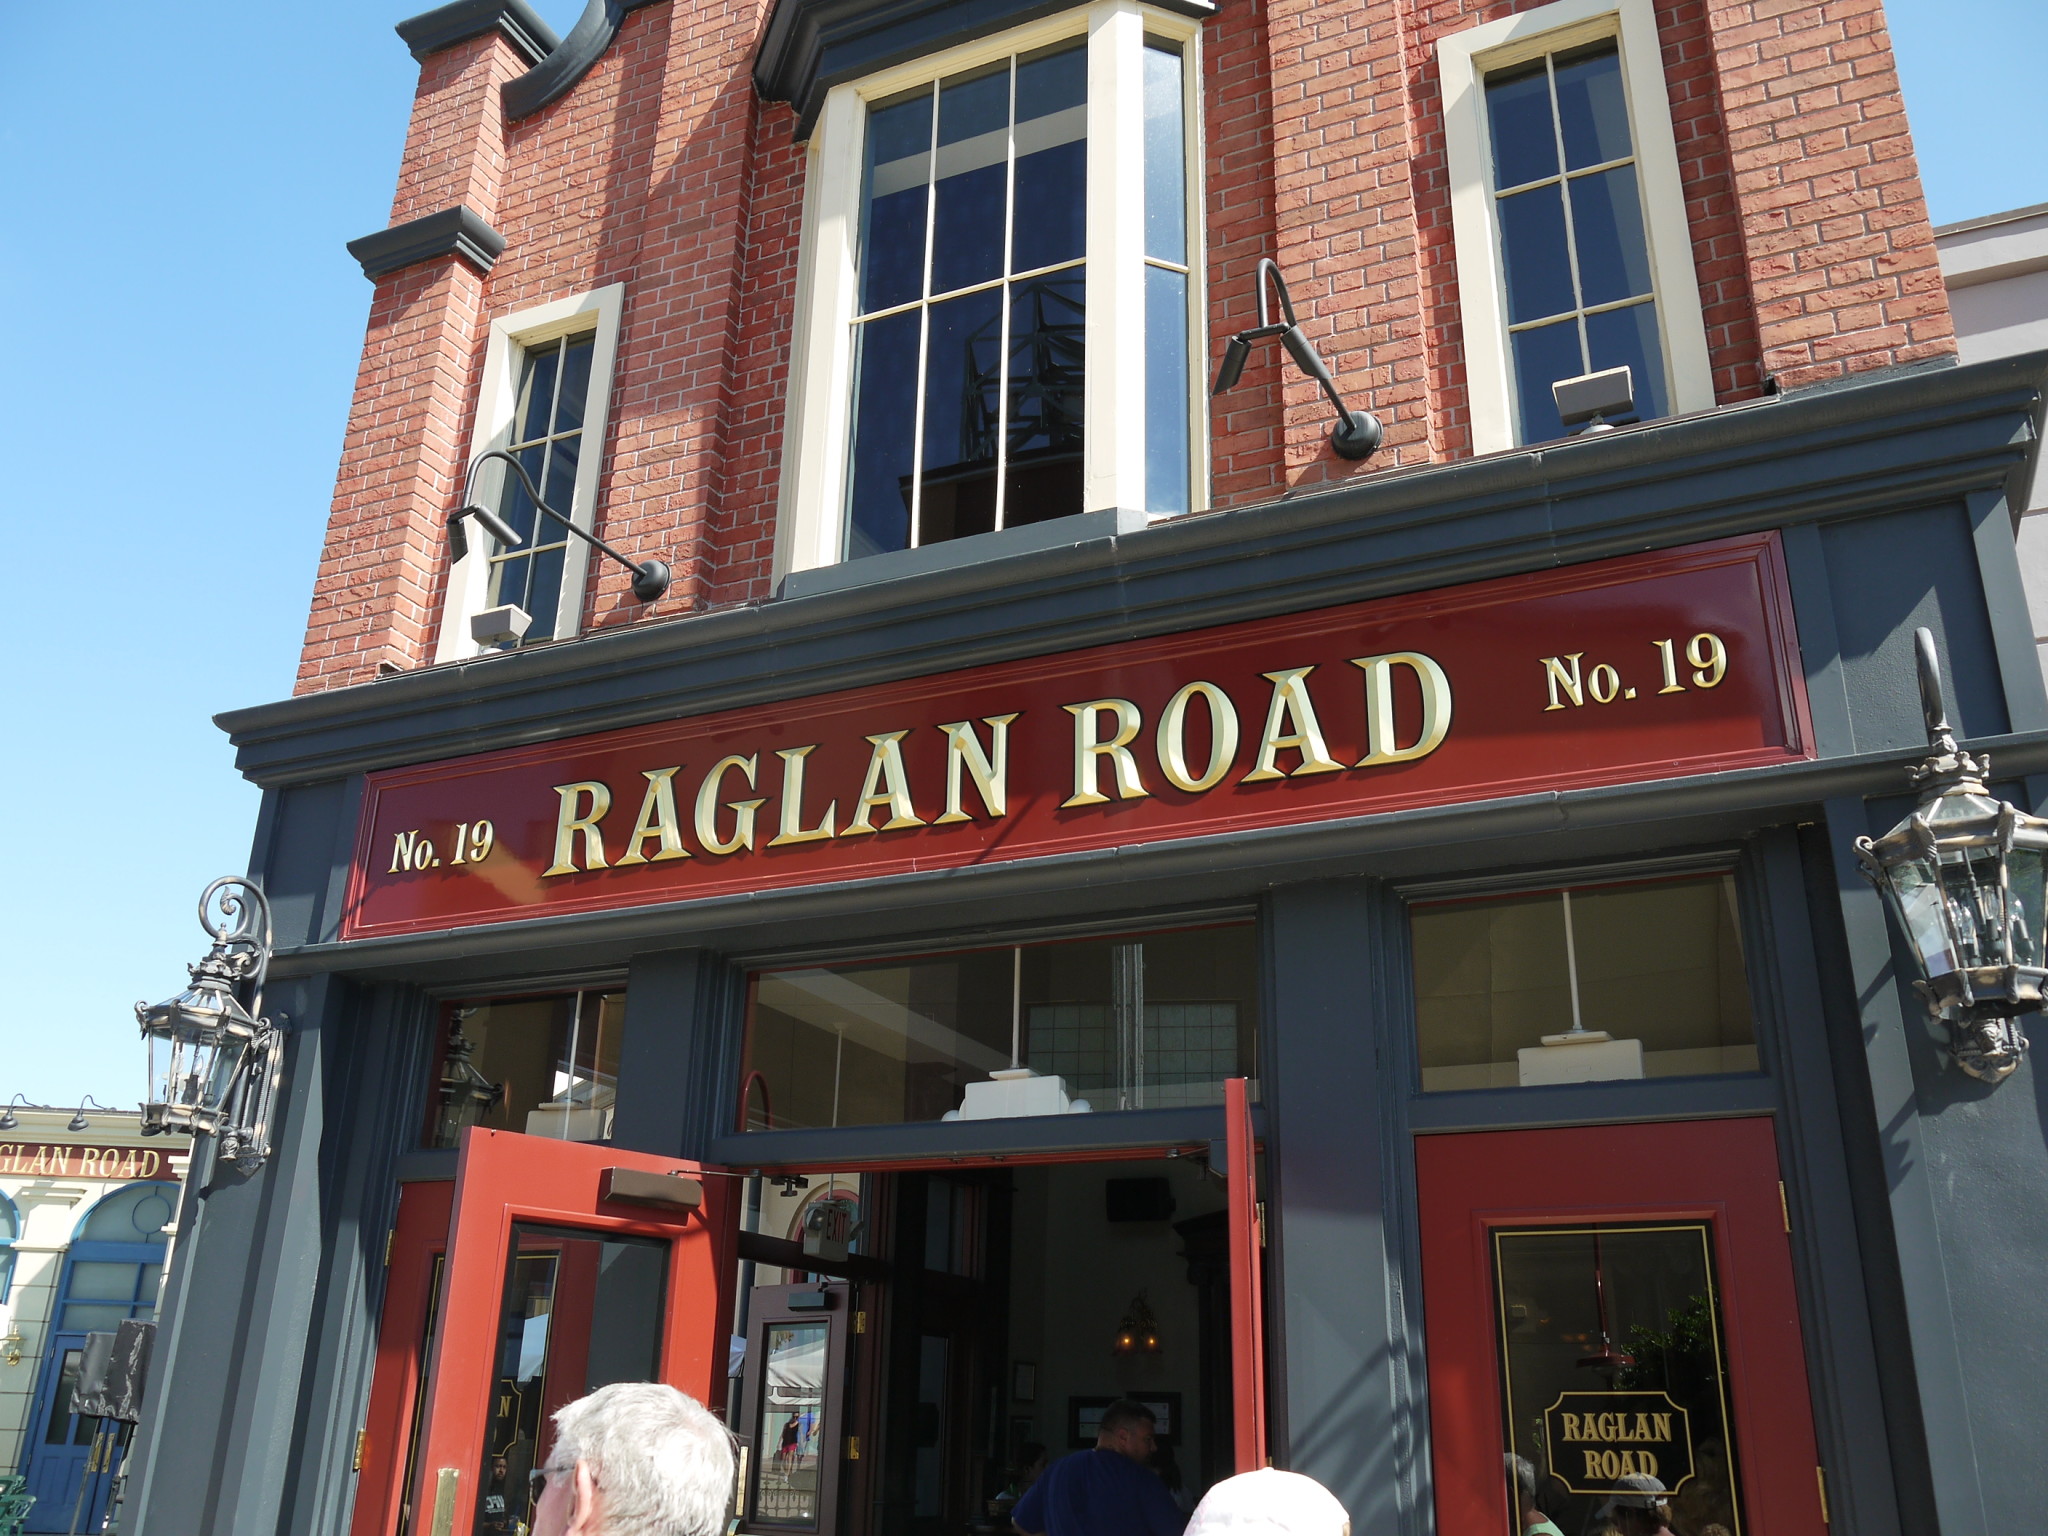 The Award for Best Restaurant goes to Raglan Road